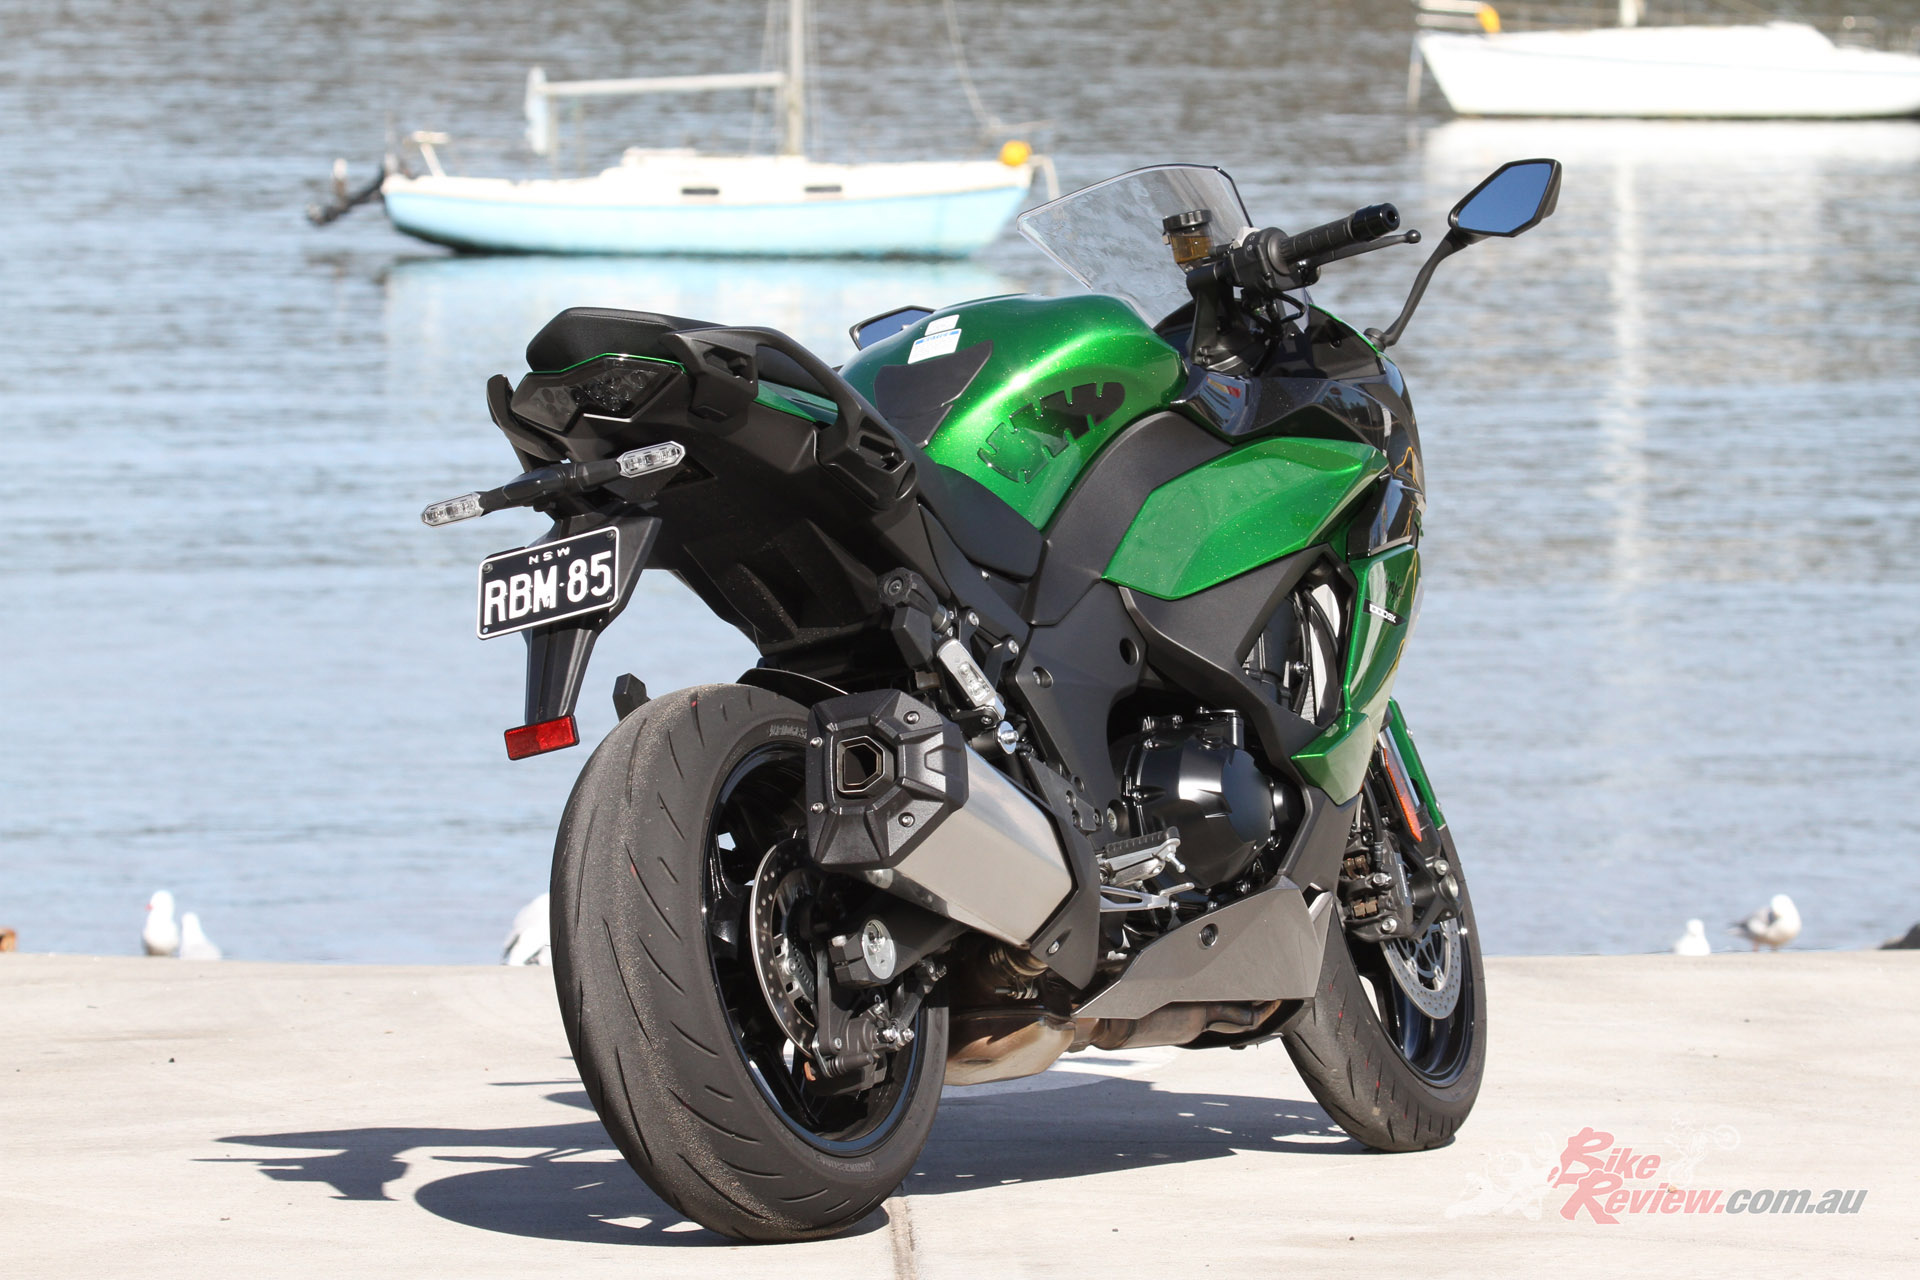 https://bikereview.com.au/wp-content/uploads/2020/10/Bikereview-2020-Kawasaki-Ninja-1000-06.jpg